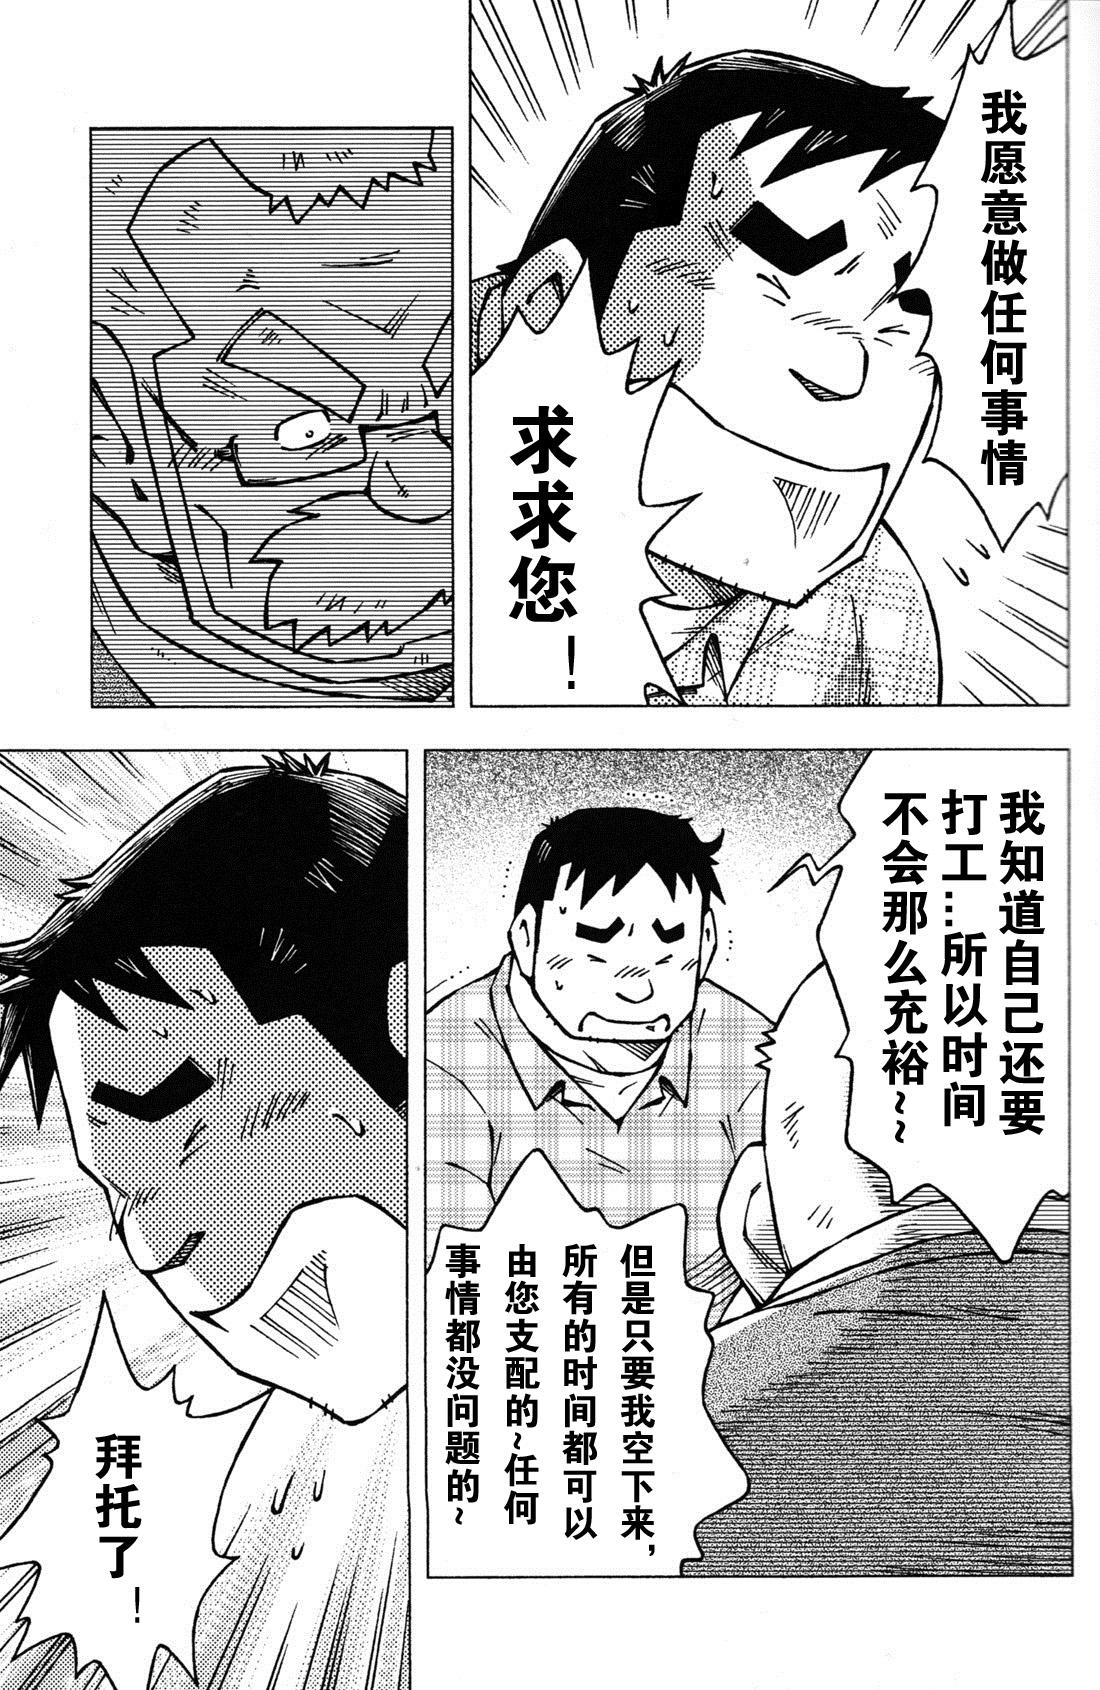 Amatuer Sensei no Tokoro e Spoon - Page 7